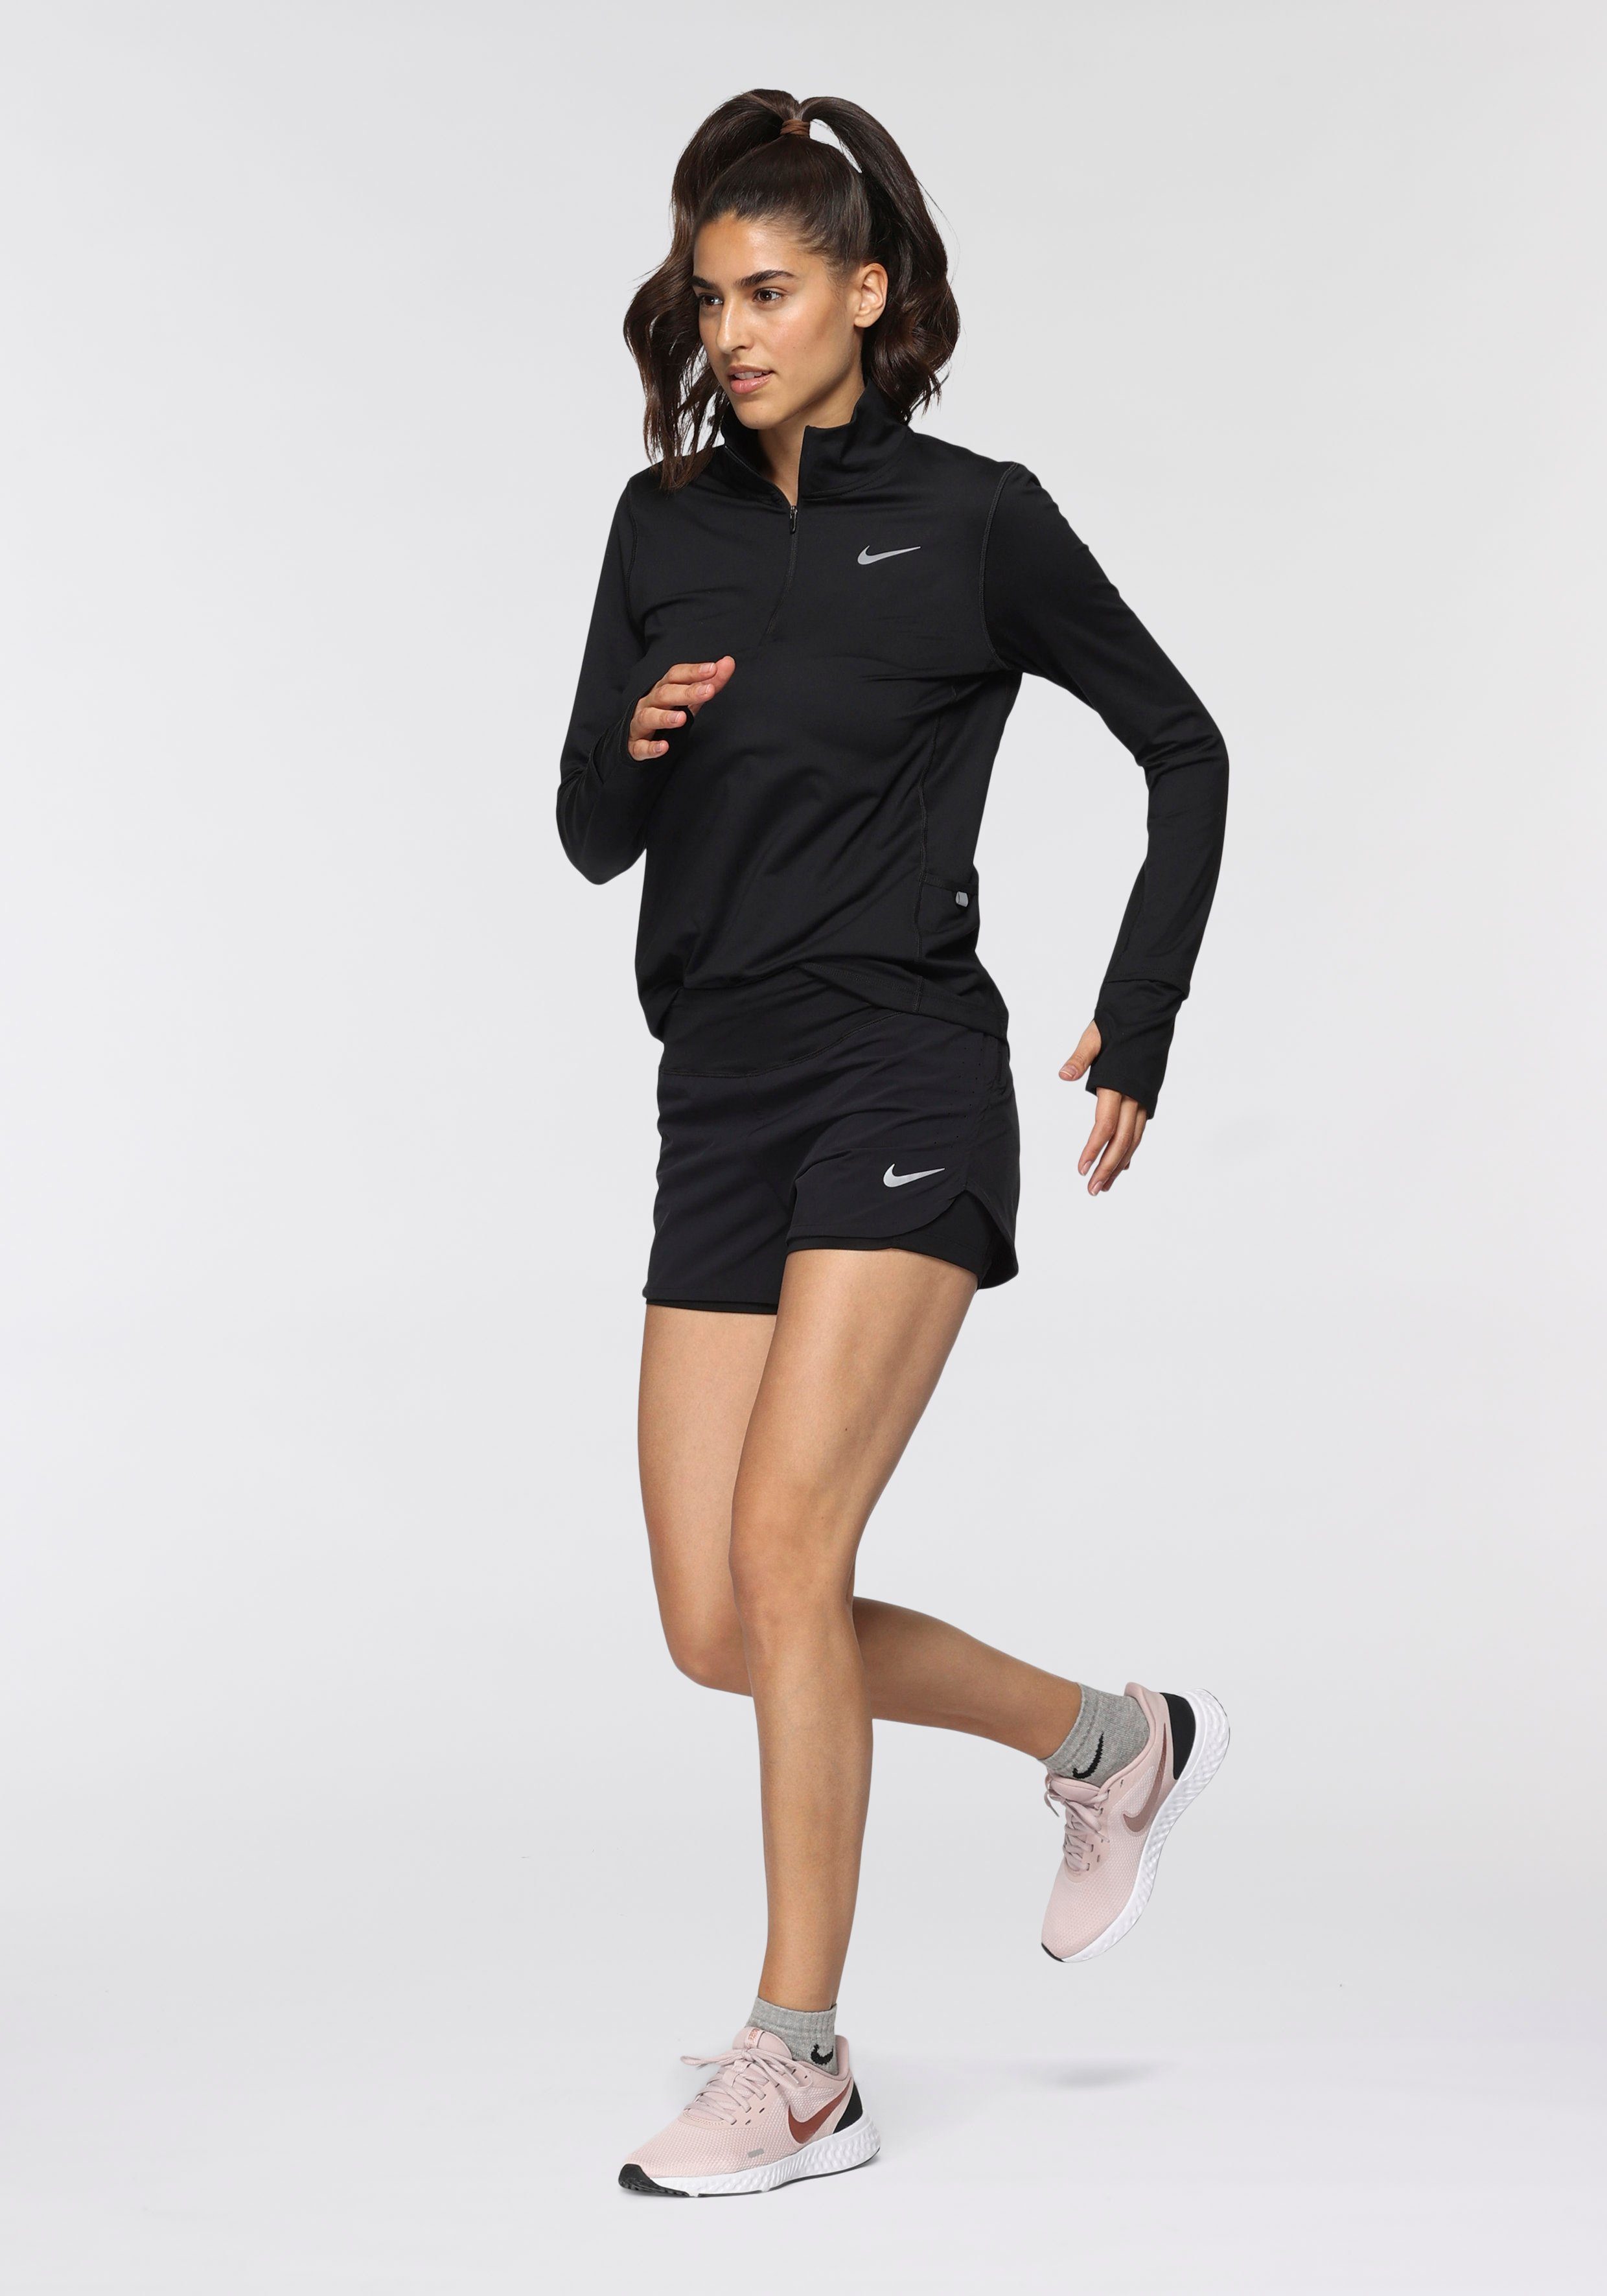 Element 1/-Zip Running Laufshirt Women's Top schwarz Nike